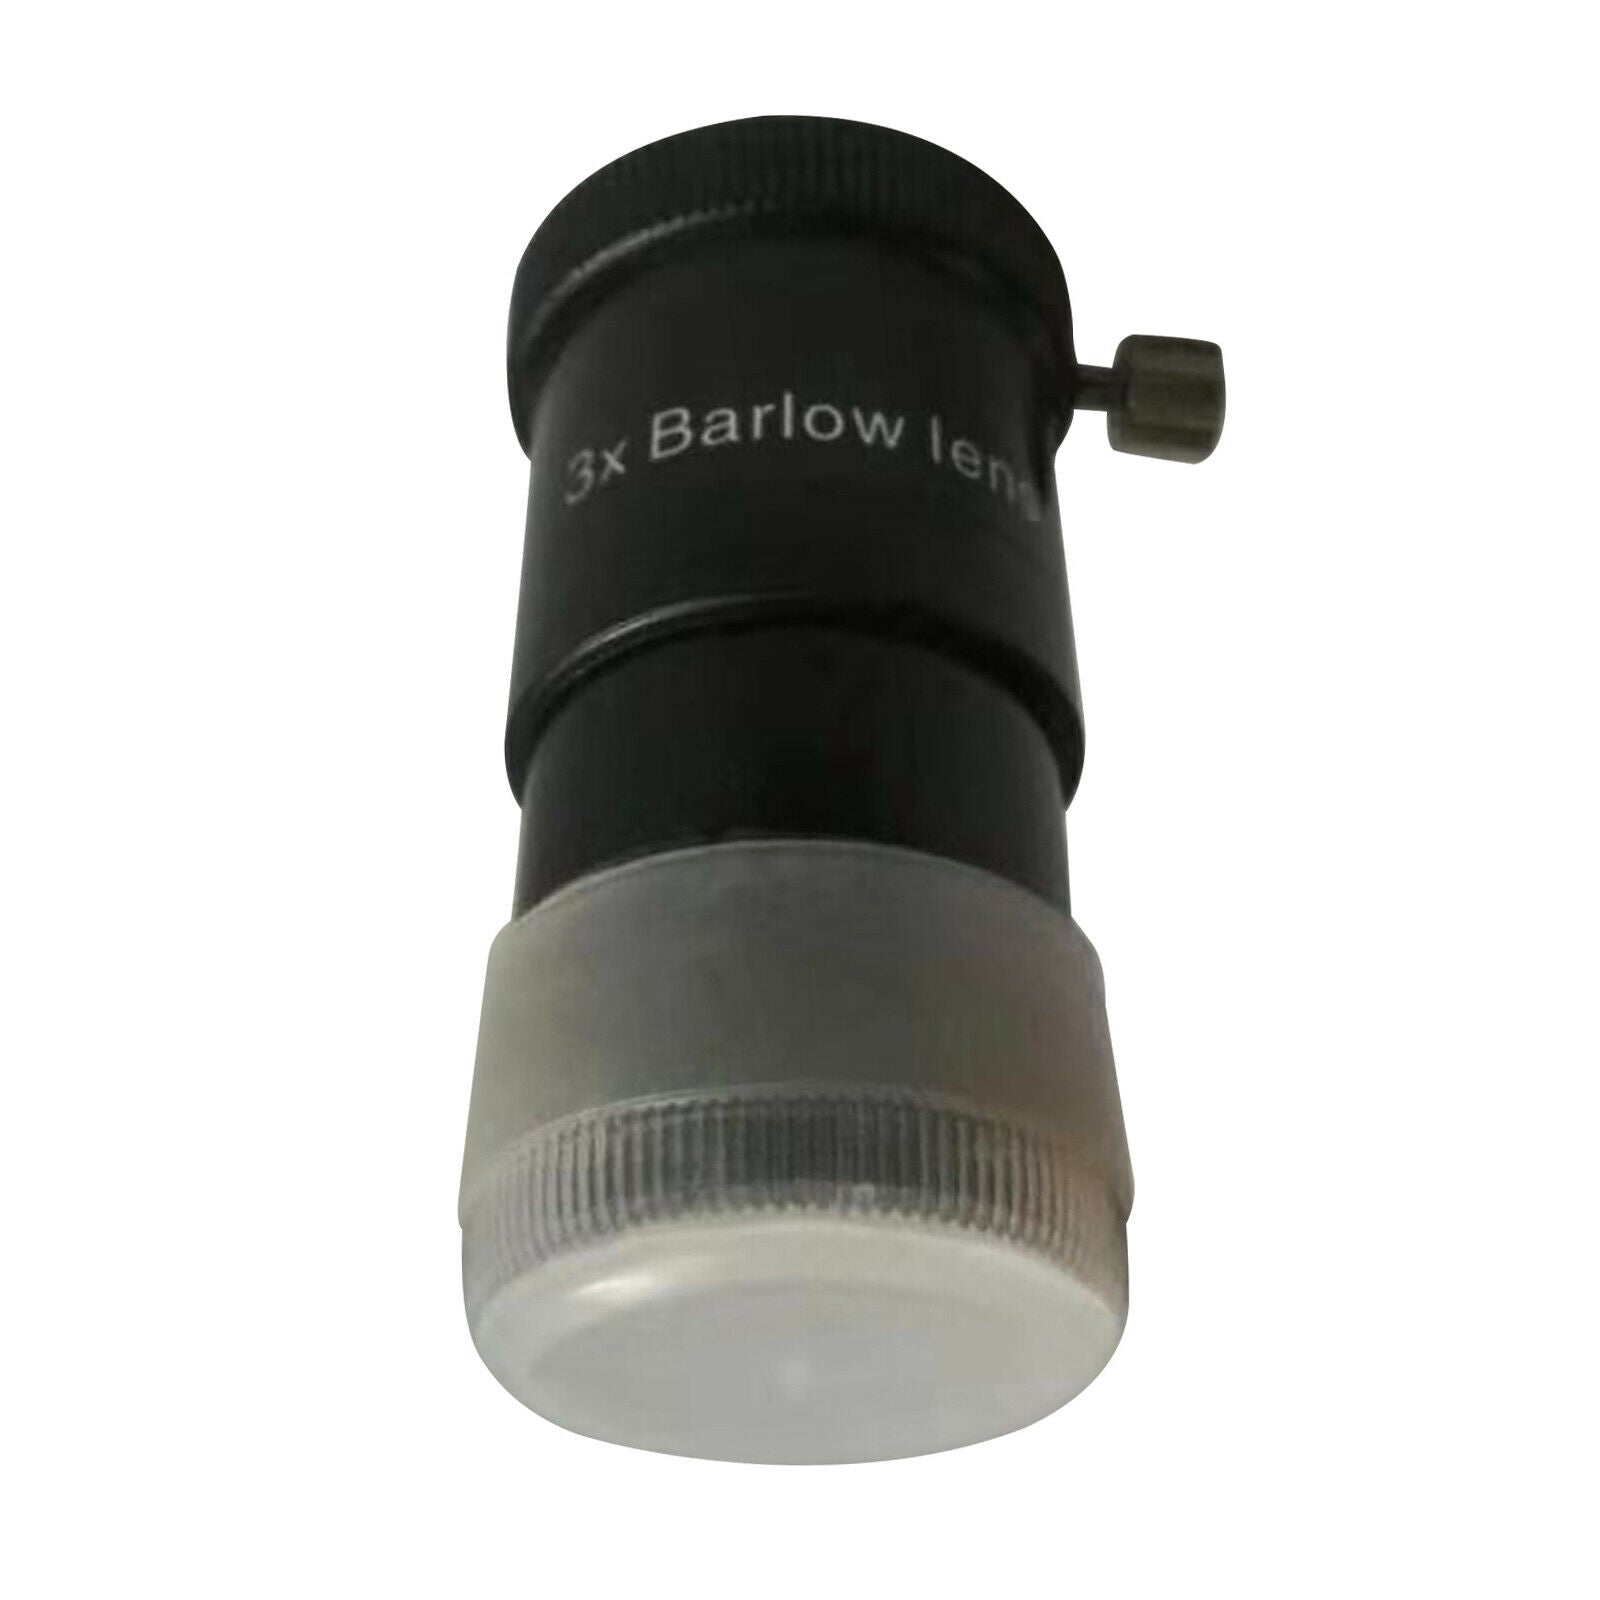 Barlow Lens Astronomy Telescope Eyepiece for   Accessory Black